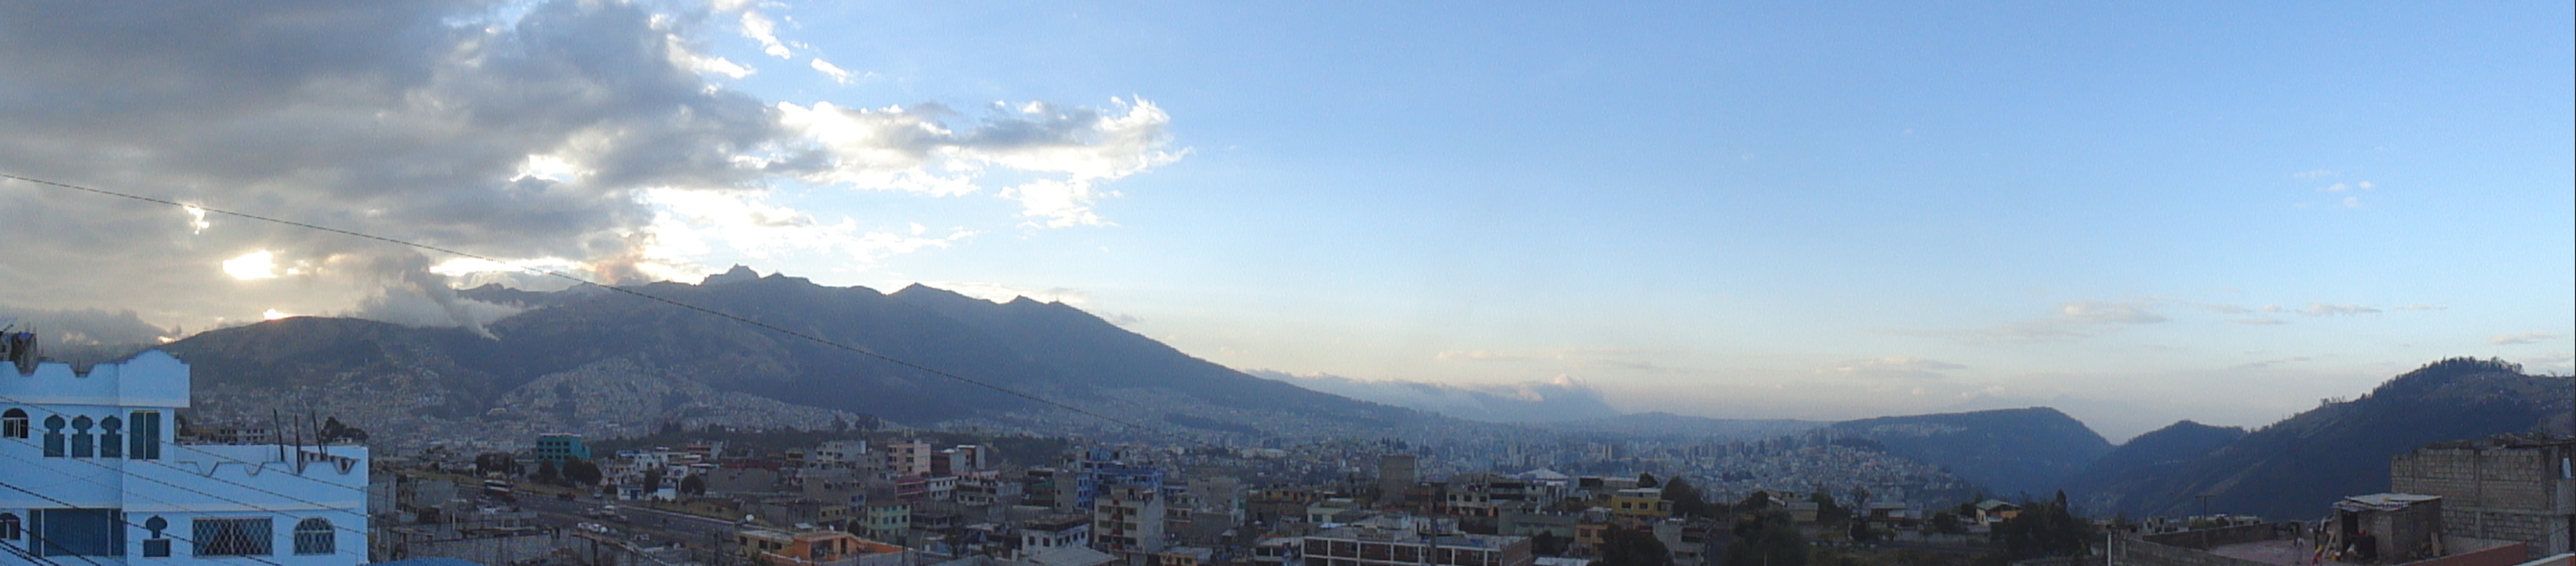 Foto: Vista panoramica - Quito (Pichincha), Ecuador